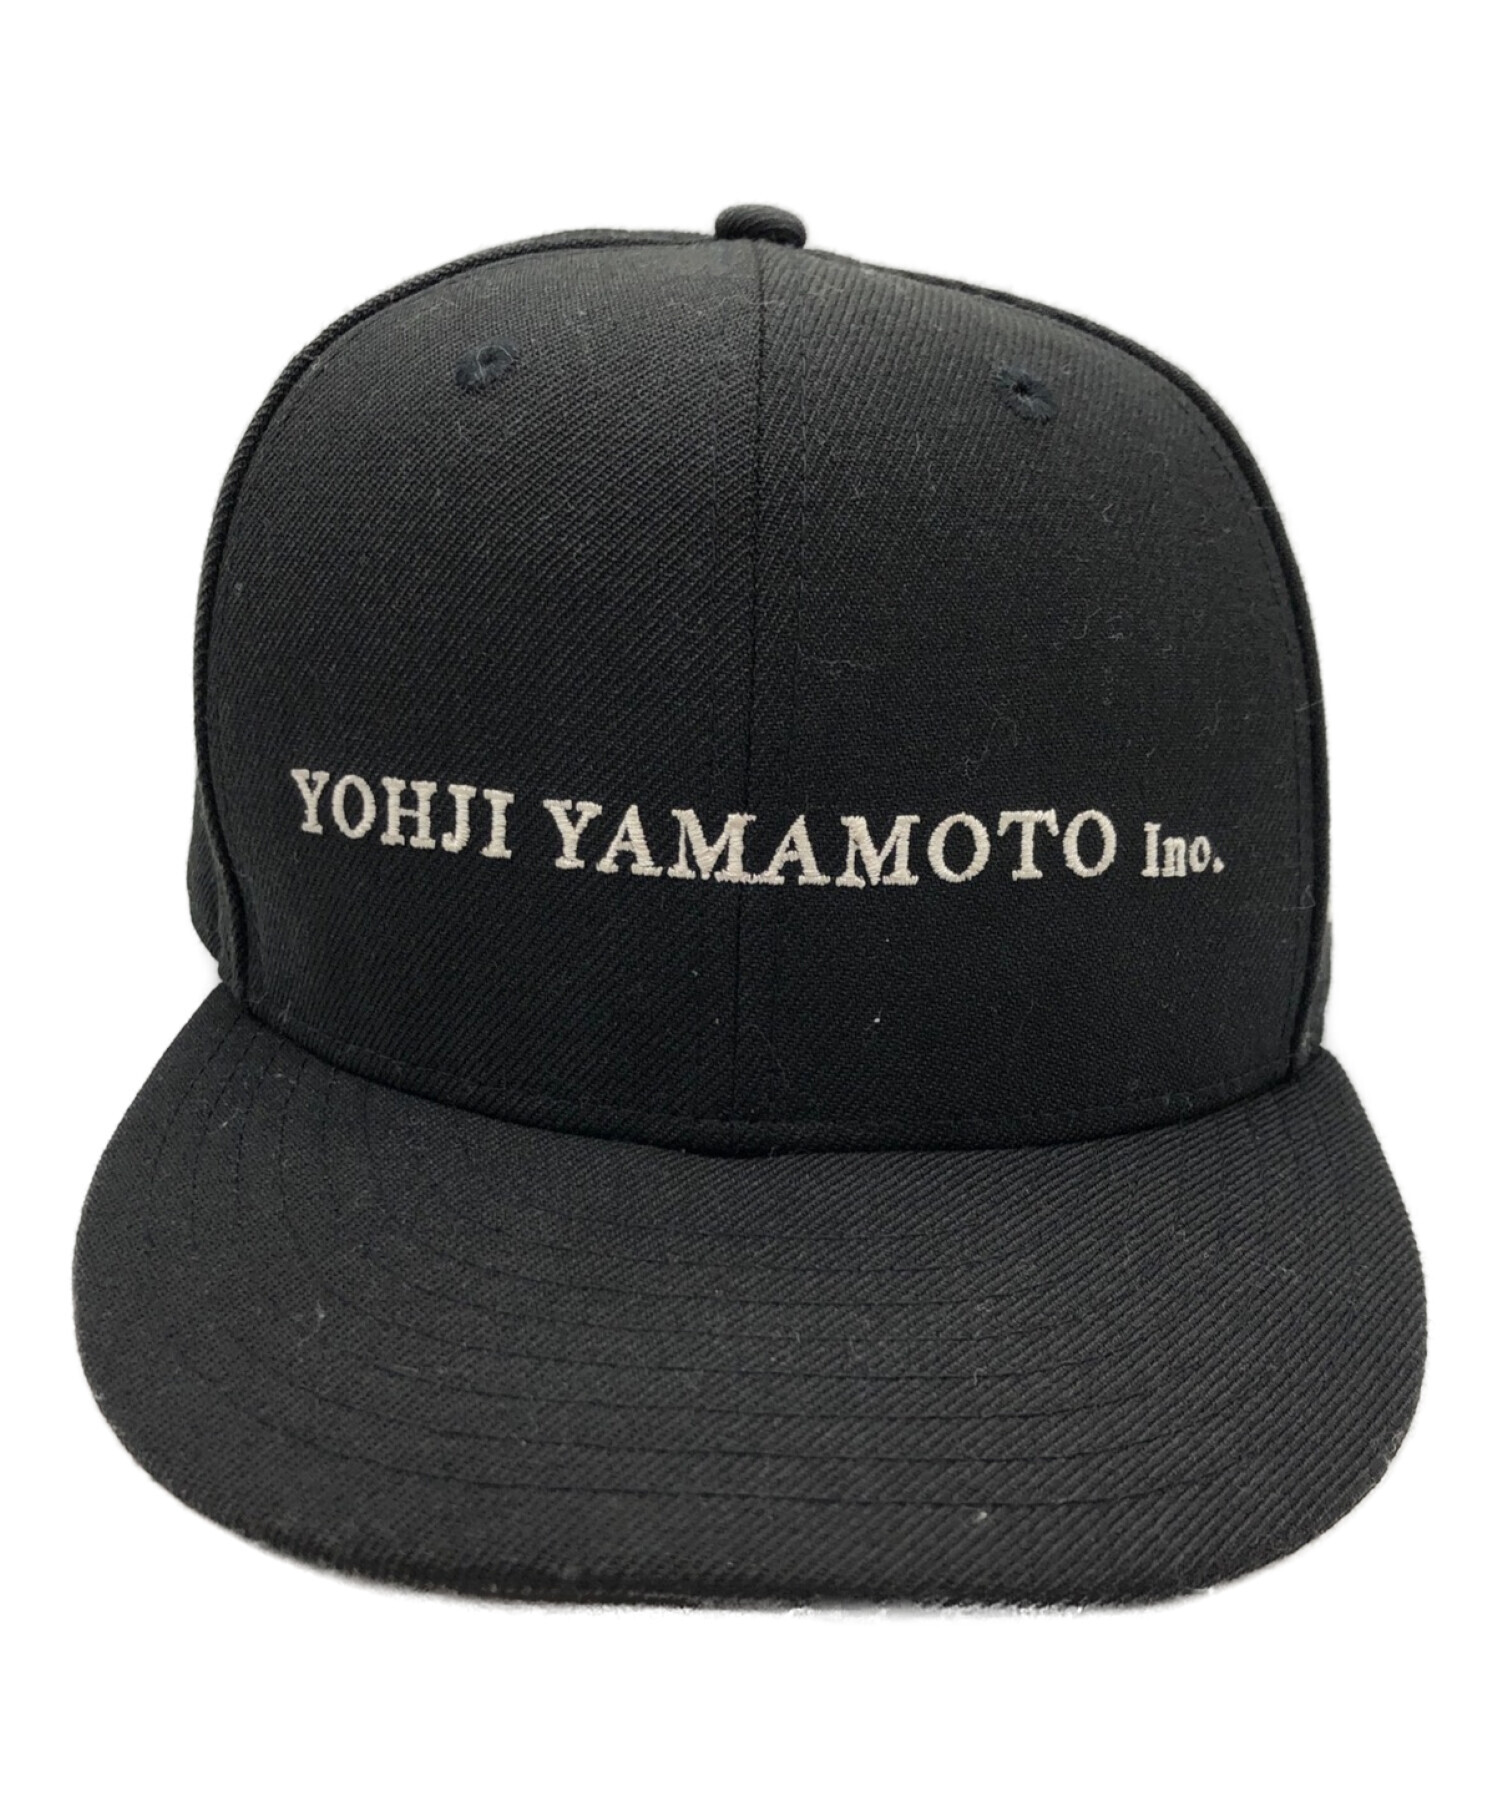 New Era (ニューエラ) YOHJI YAMAMOTO (ヨウジヤマモト) キャップ サイズ:7 1/2